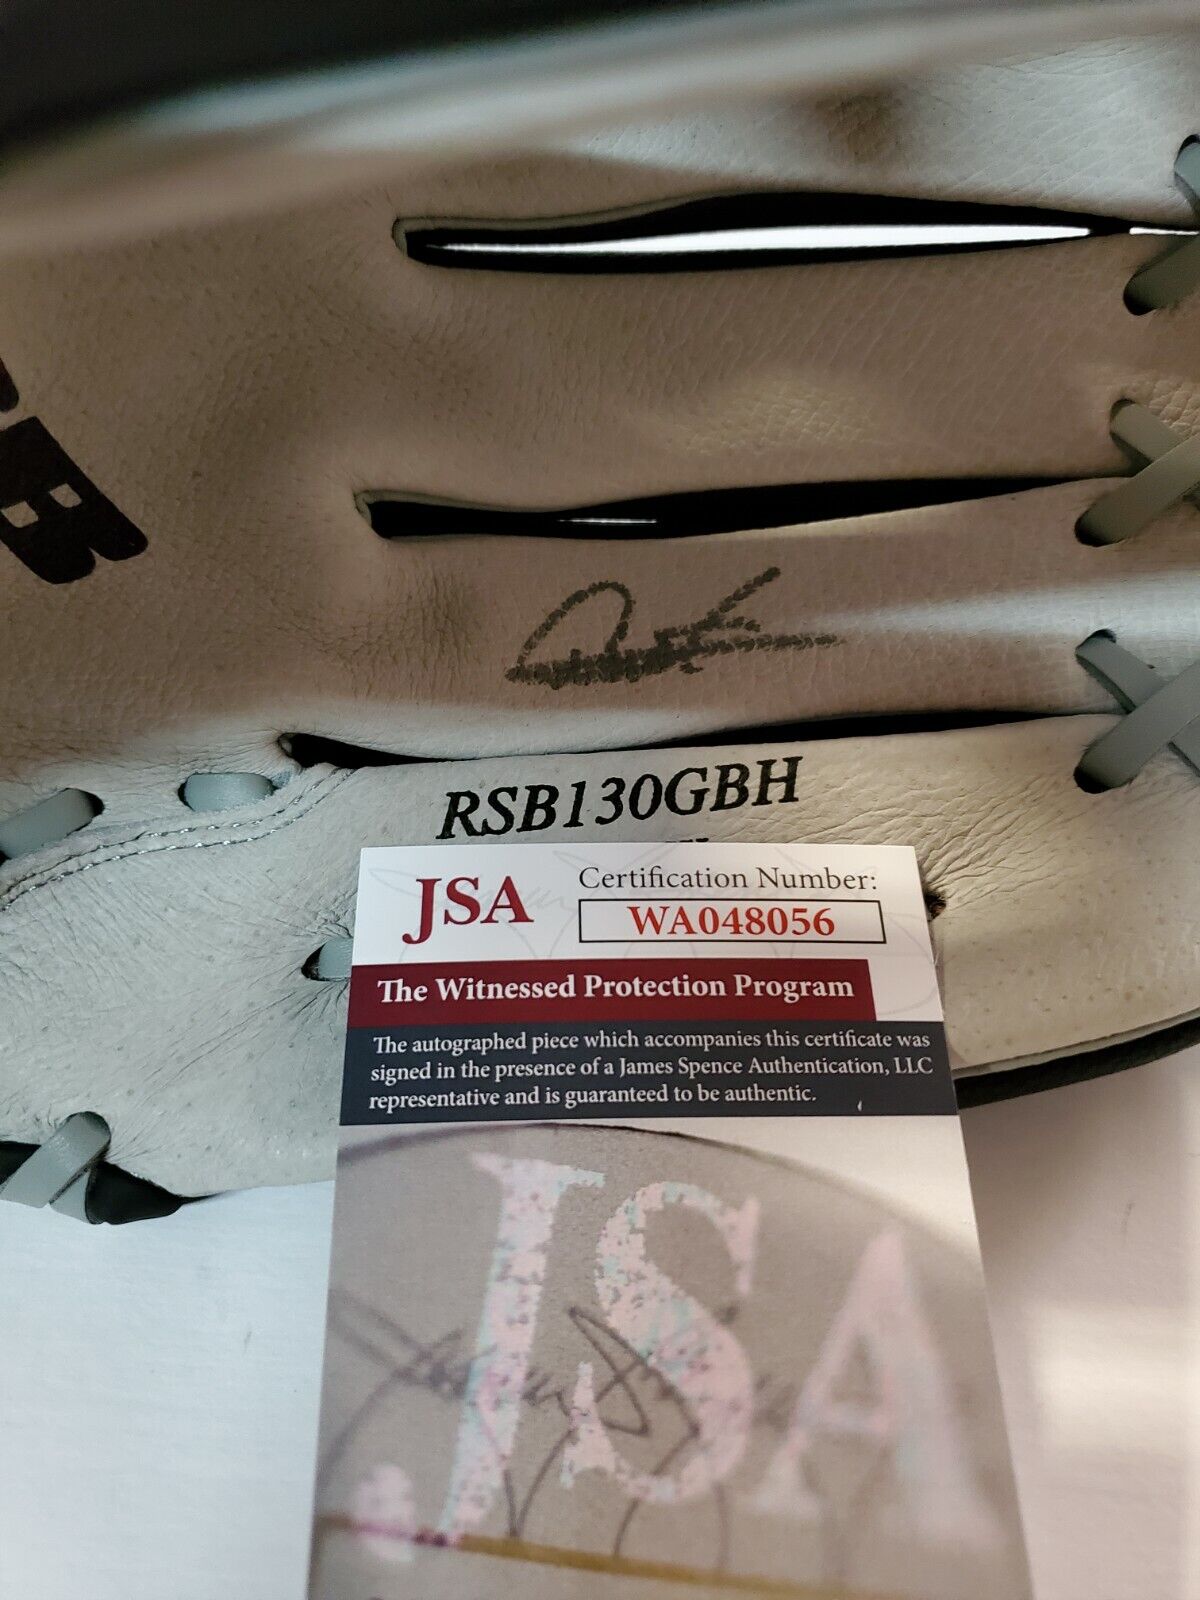 MVP Authentics New York Yankees Deivi Garcia Autographed Signed Glove Jsa Coa 157.50 sports jersey framing , jersey framing